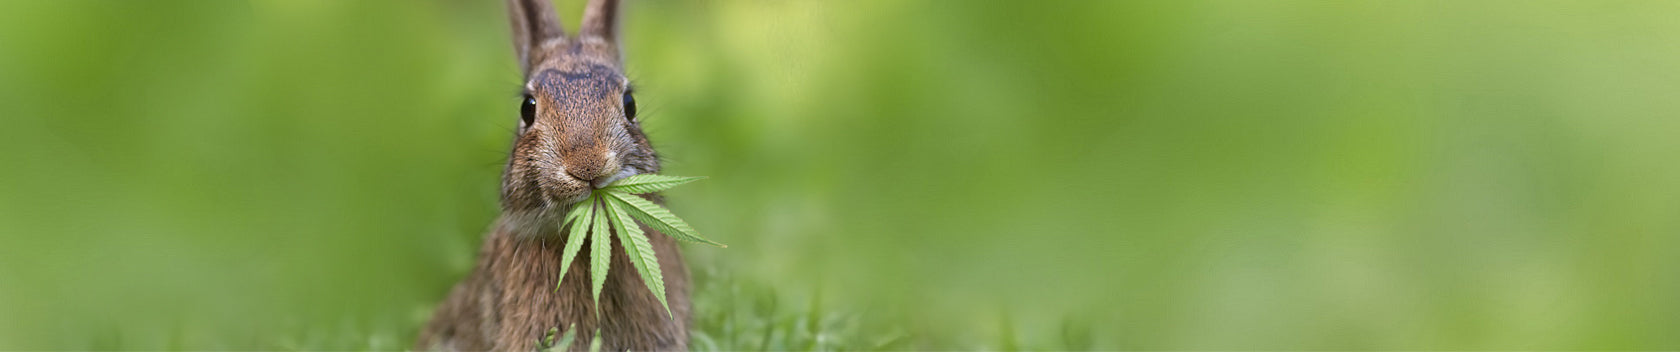 Rabbit cannabis Hemp Marijuana leaves medicalcannabis